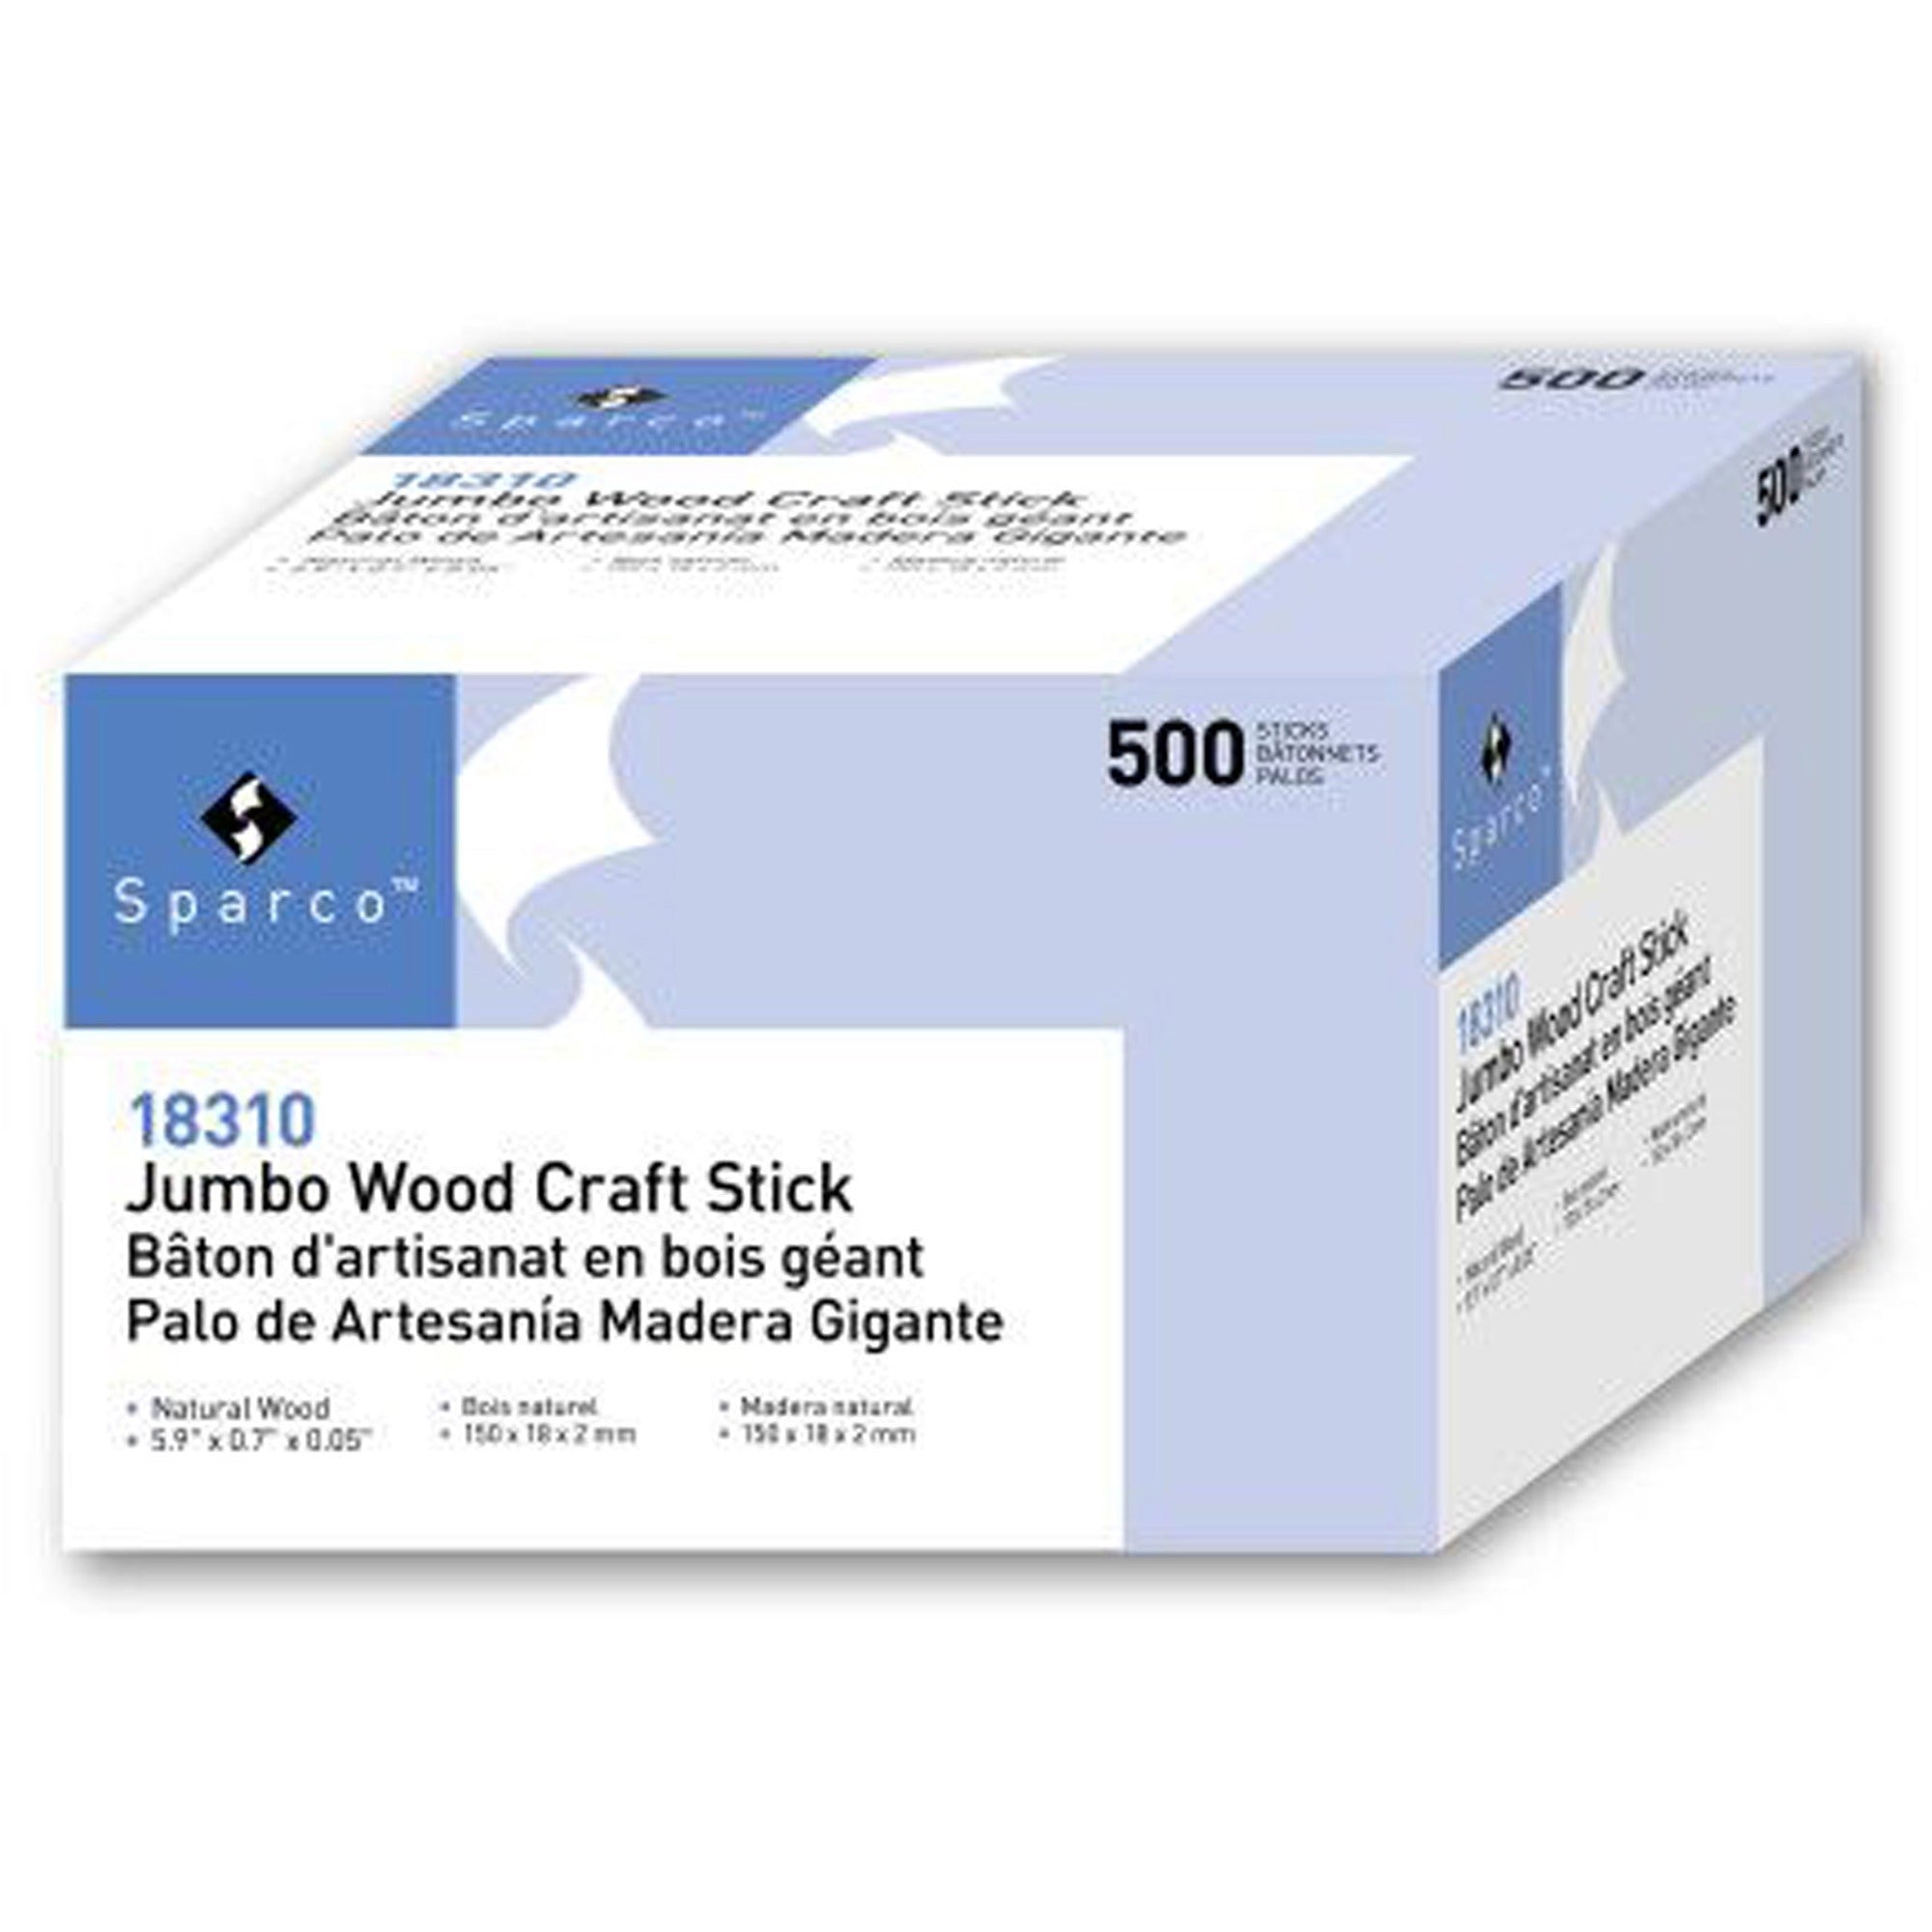 sparco-jumbo-craft-sticks-multipurpose-005height-x-590width-x-070depth-500-box-brown-wood_spr18310 - 1